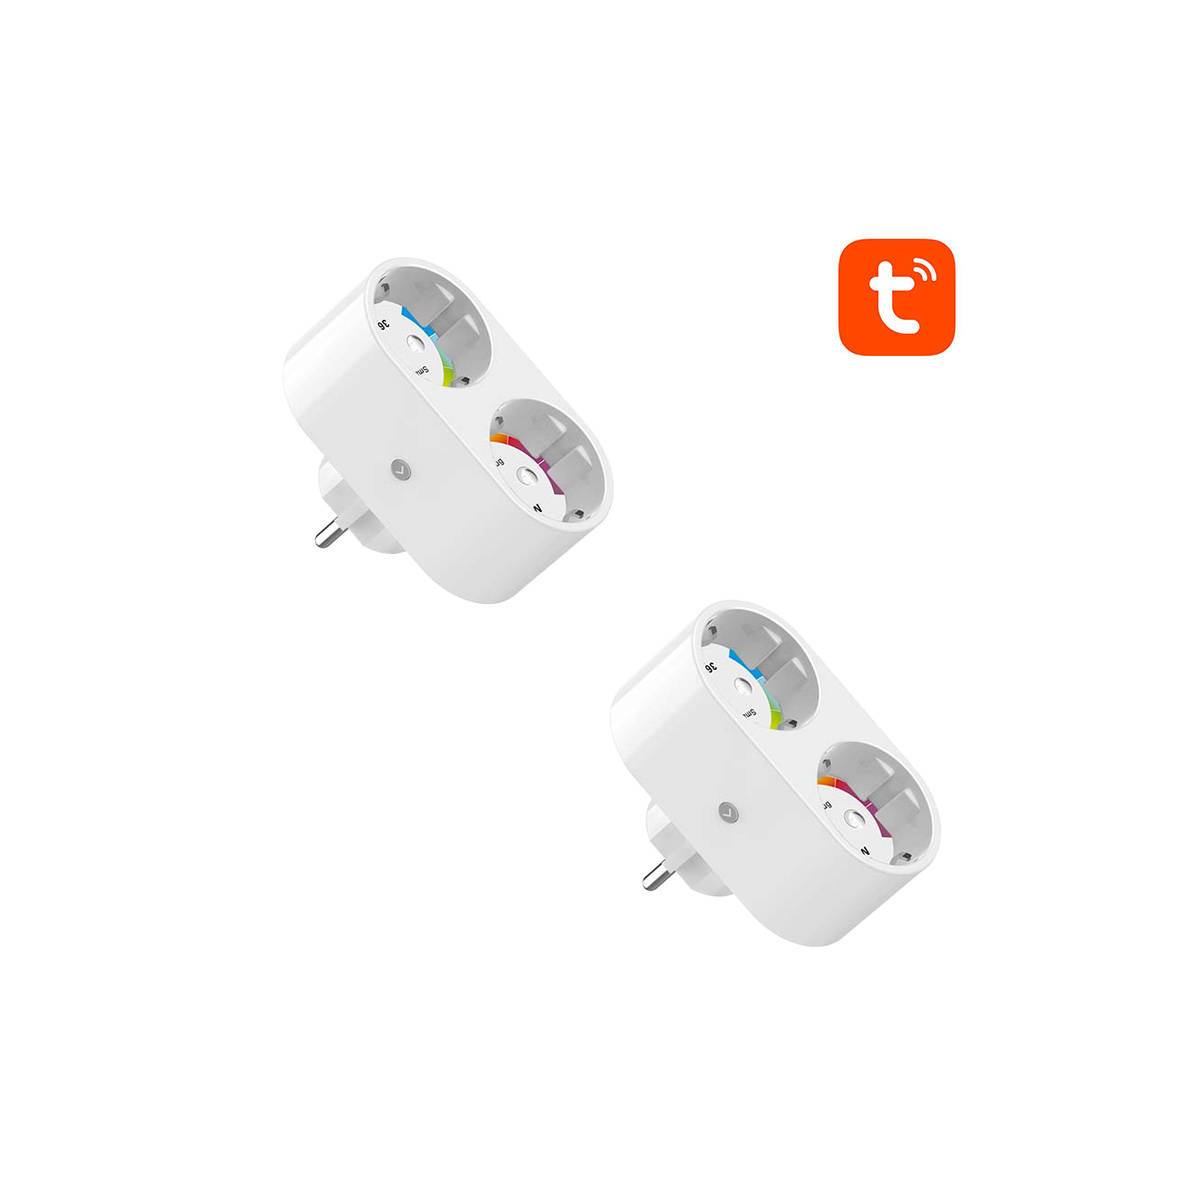 Gosund 2-pack Smart double 2x power plug with Wi-Fi - Alexa, Google Home -  Mackabler.dk